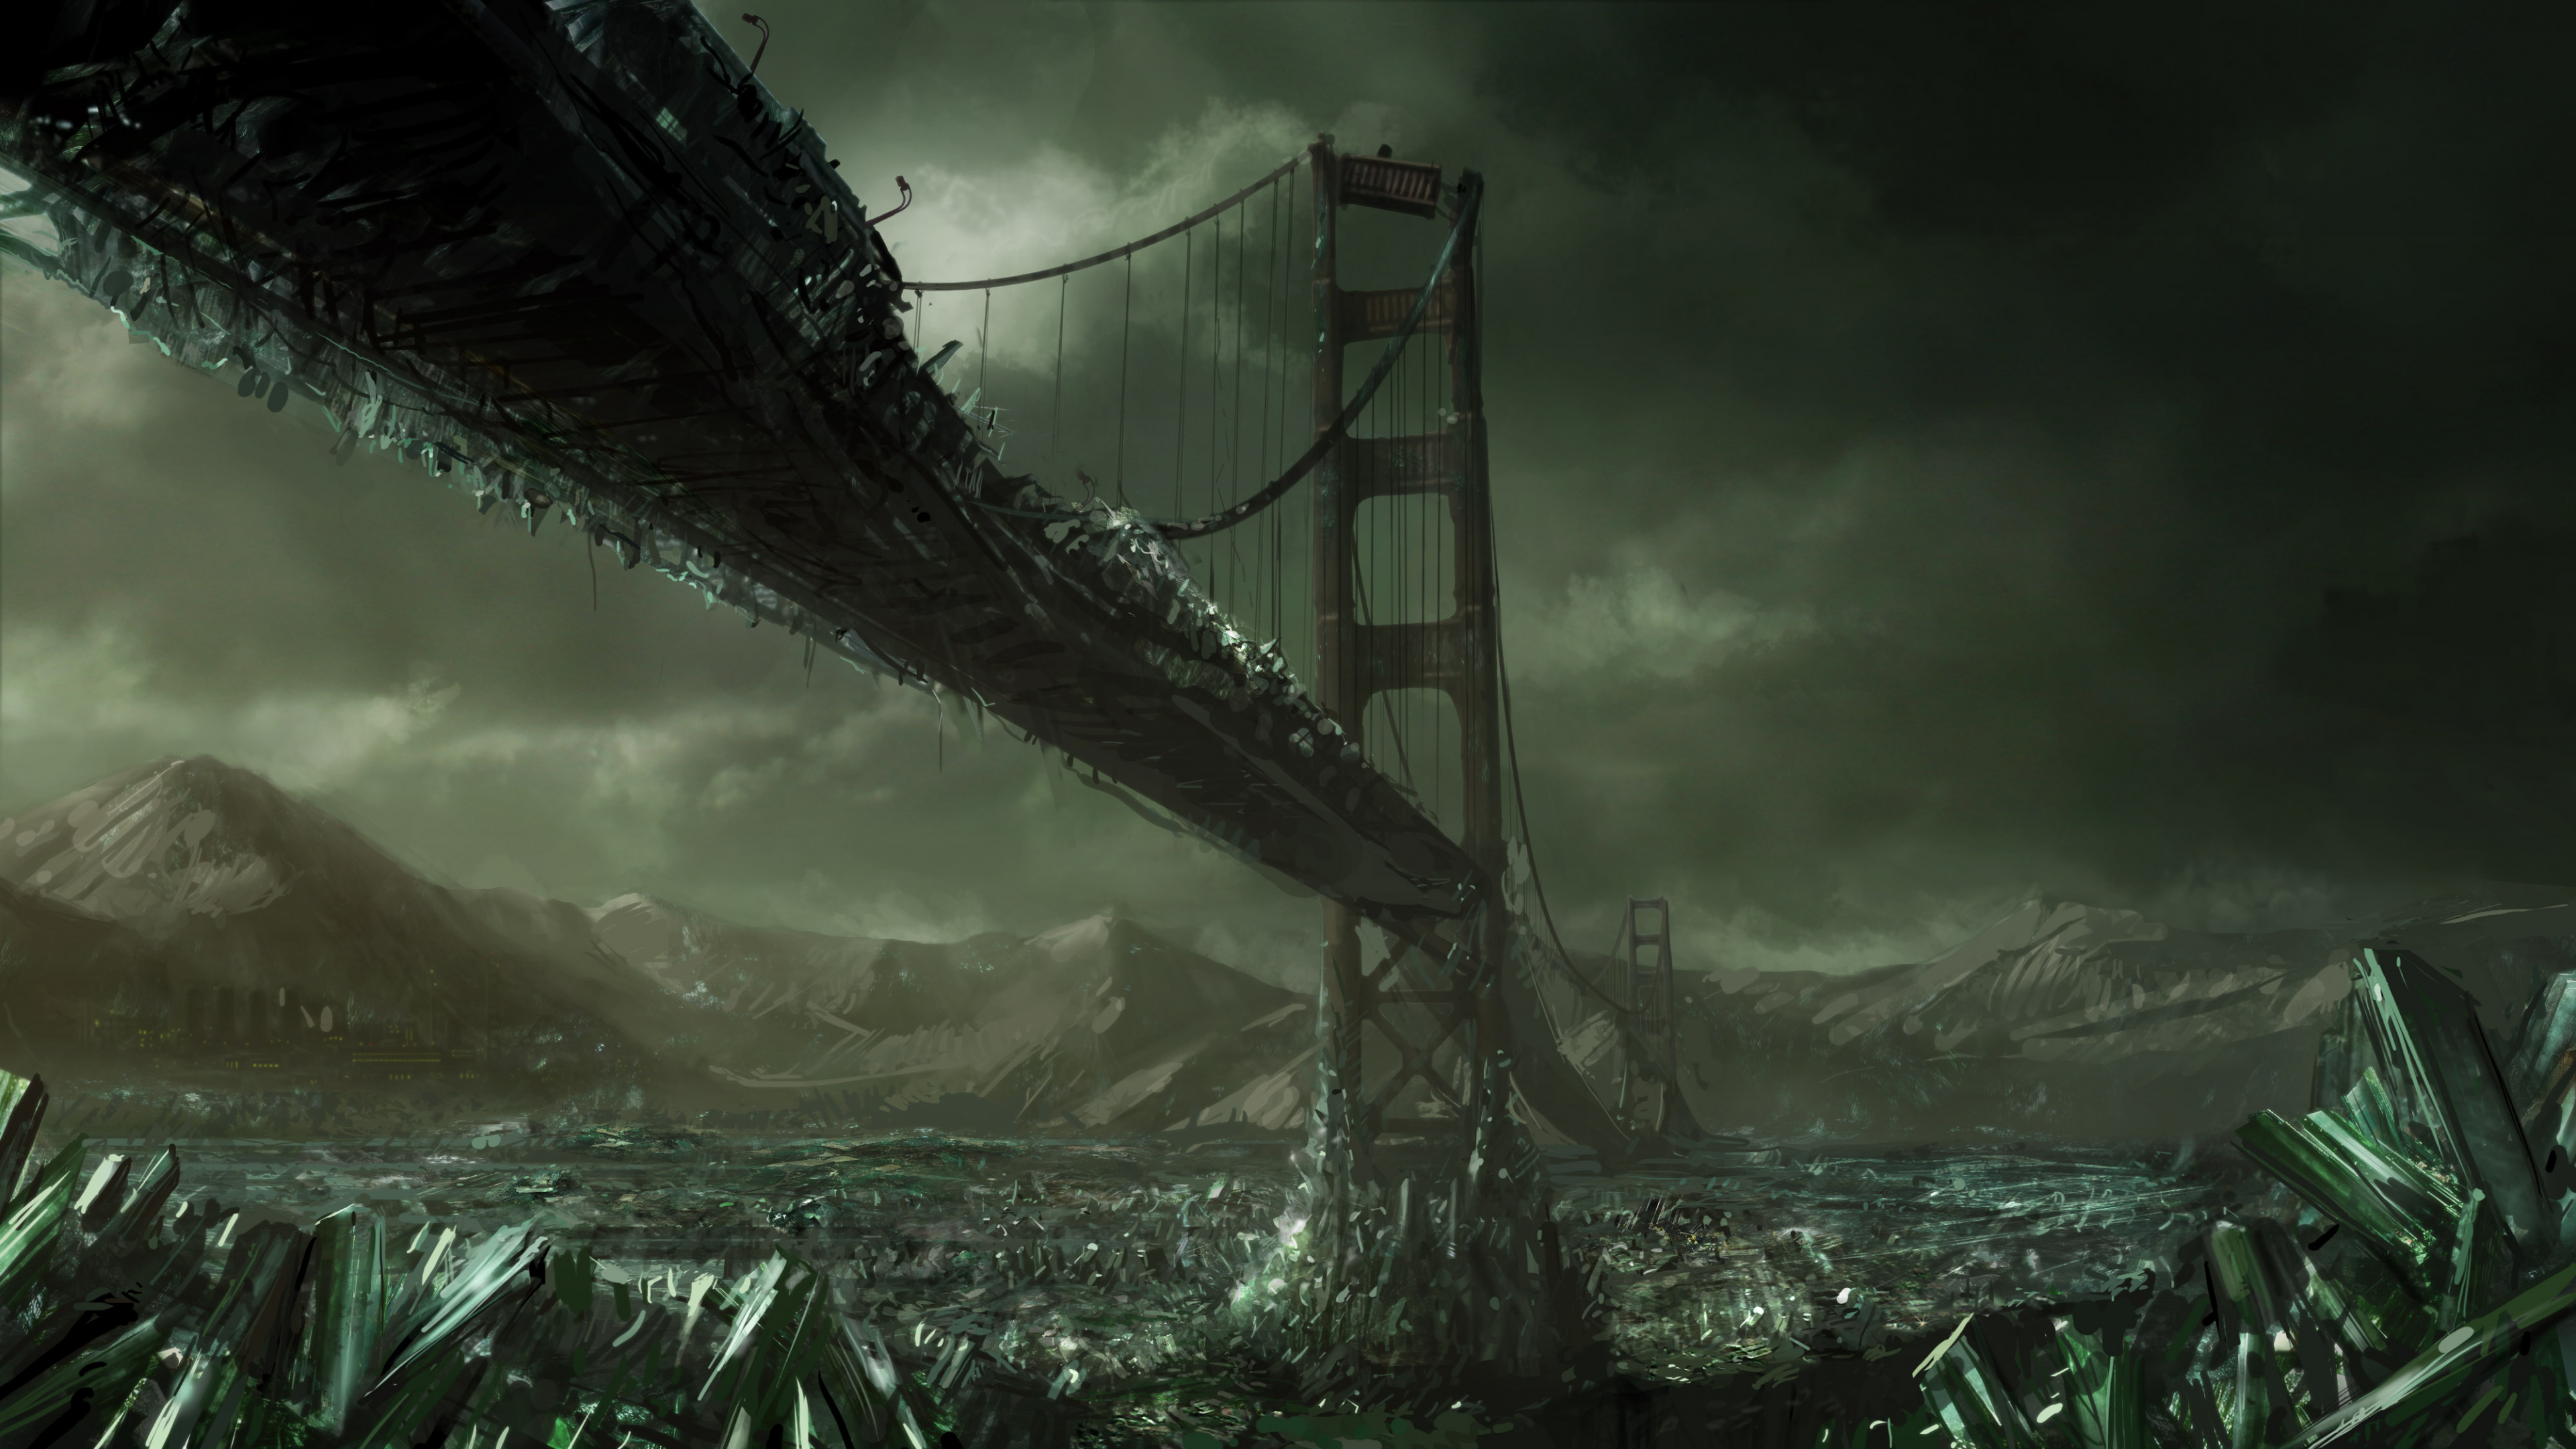 Artwork Apocalyptic Gloomy Science Fiction Golden Gate Bridge Frozen River Frozen Water Command Conq 3840x2160